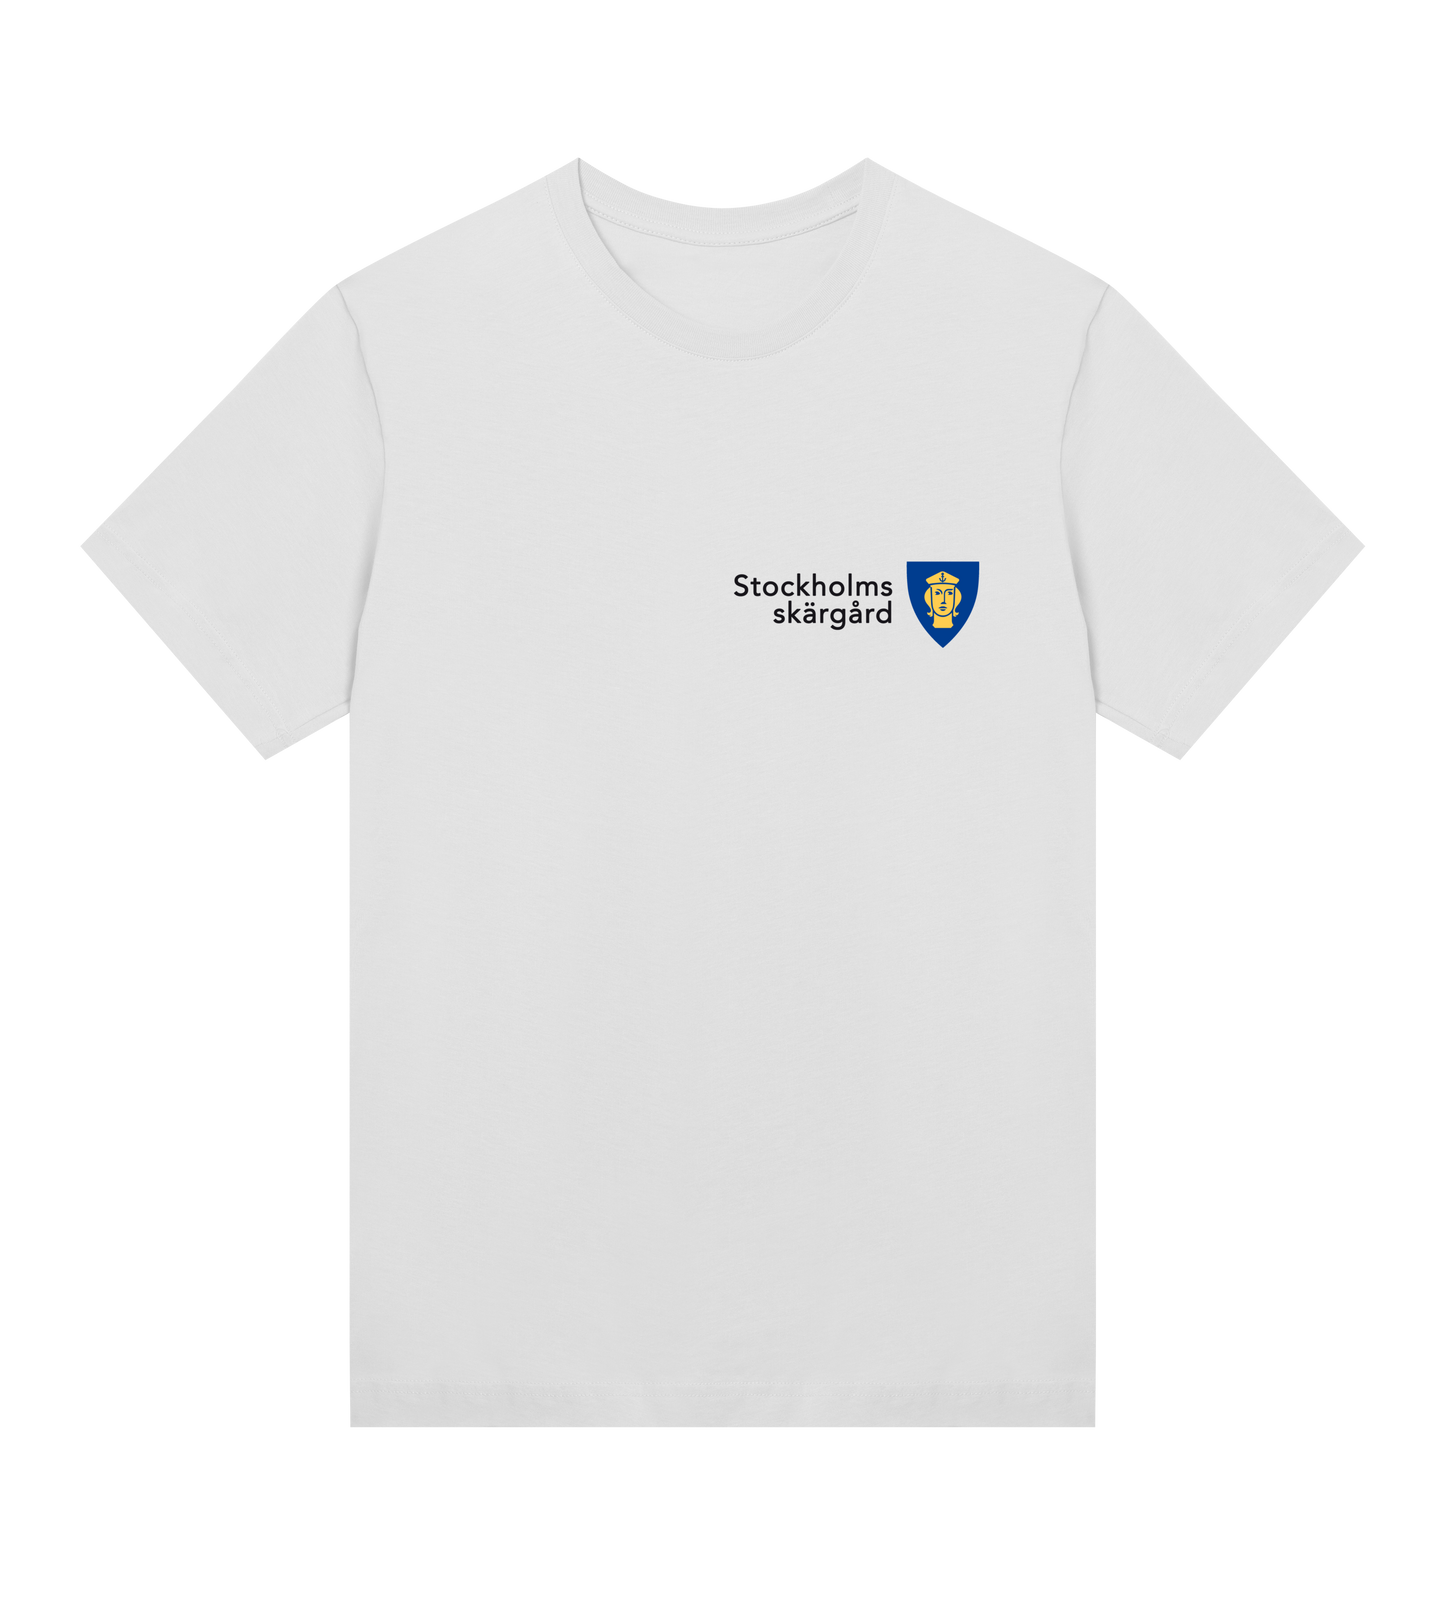 Stockholms skärgård, T-shirt (Dam)